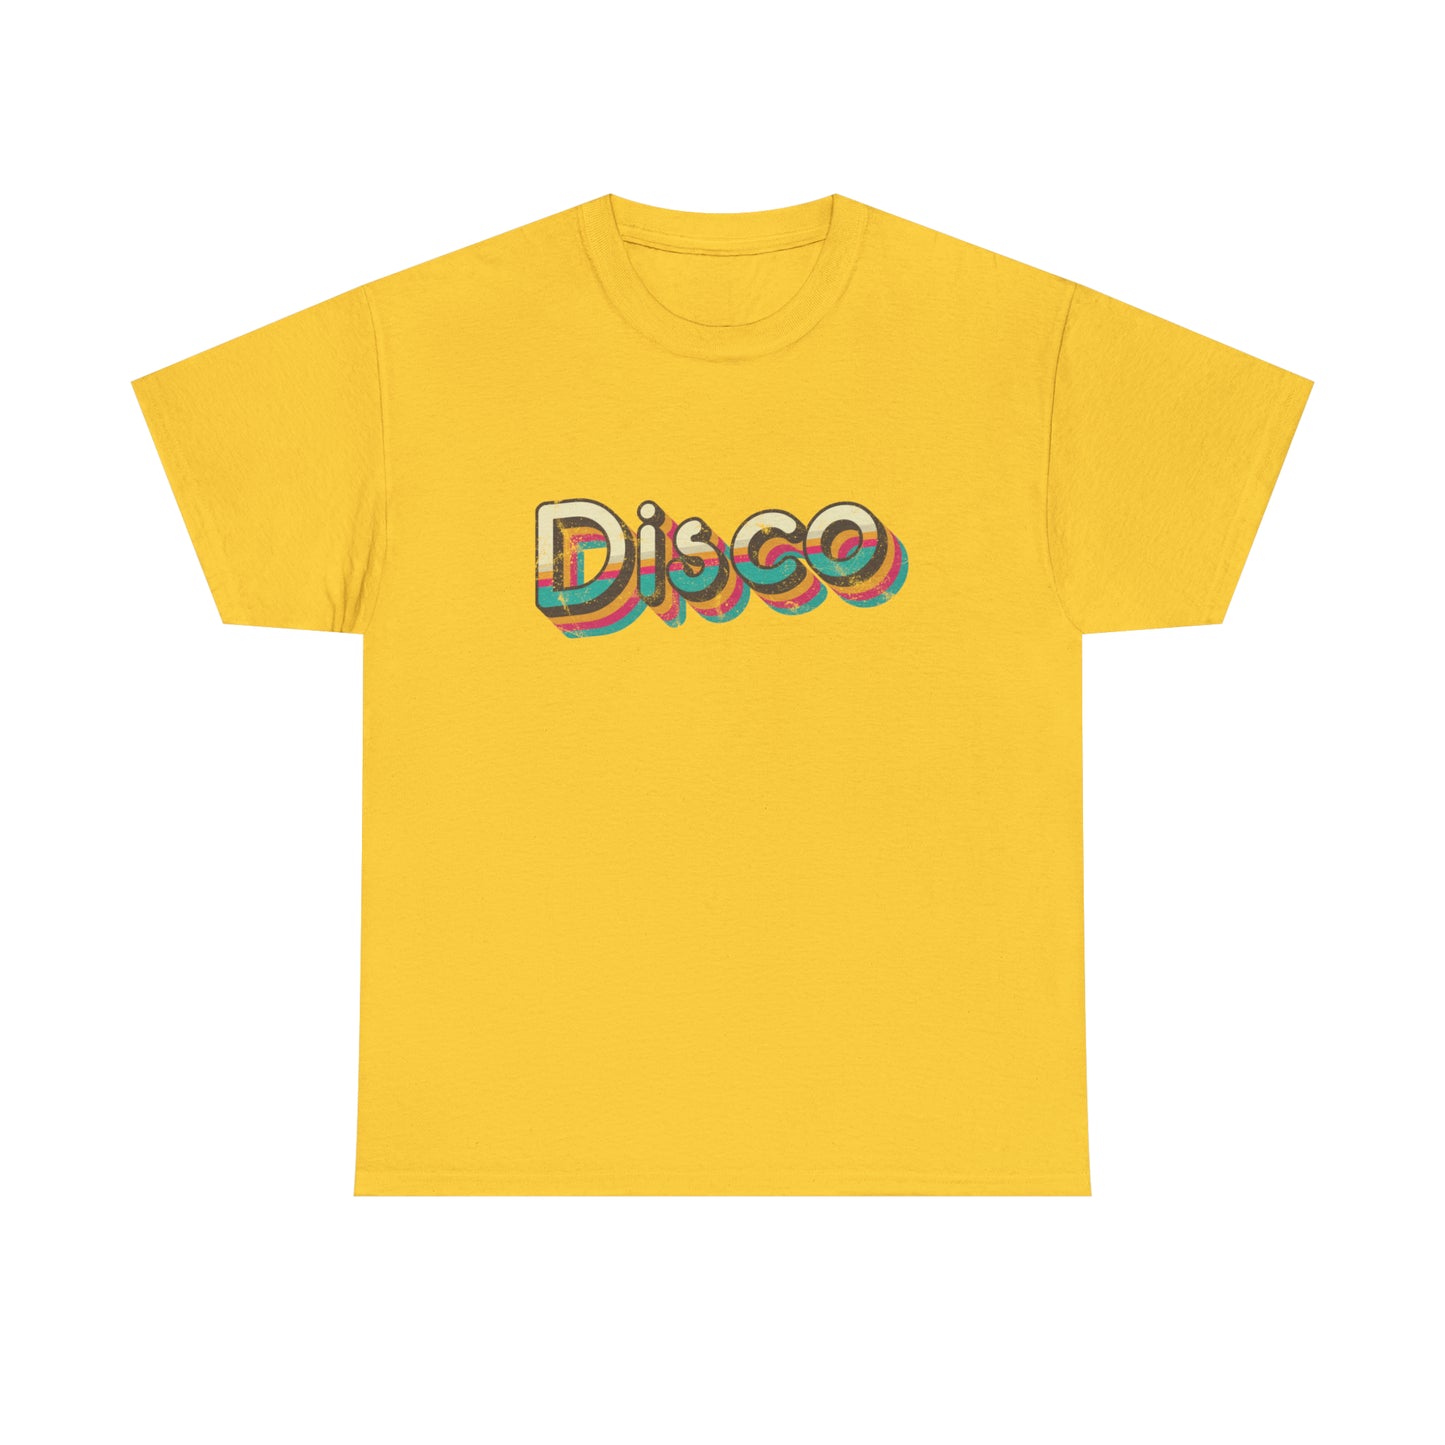 Disco T-Shirt For Seventies TShirt 3D Disco T Shirt For Fun 70s Tee For Retro Vibe Shirt